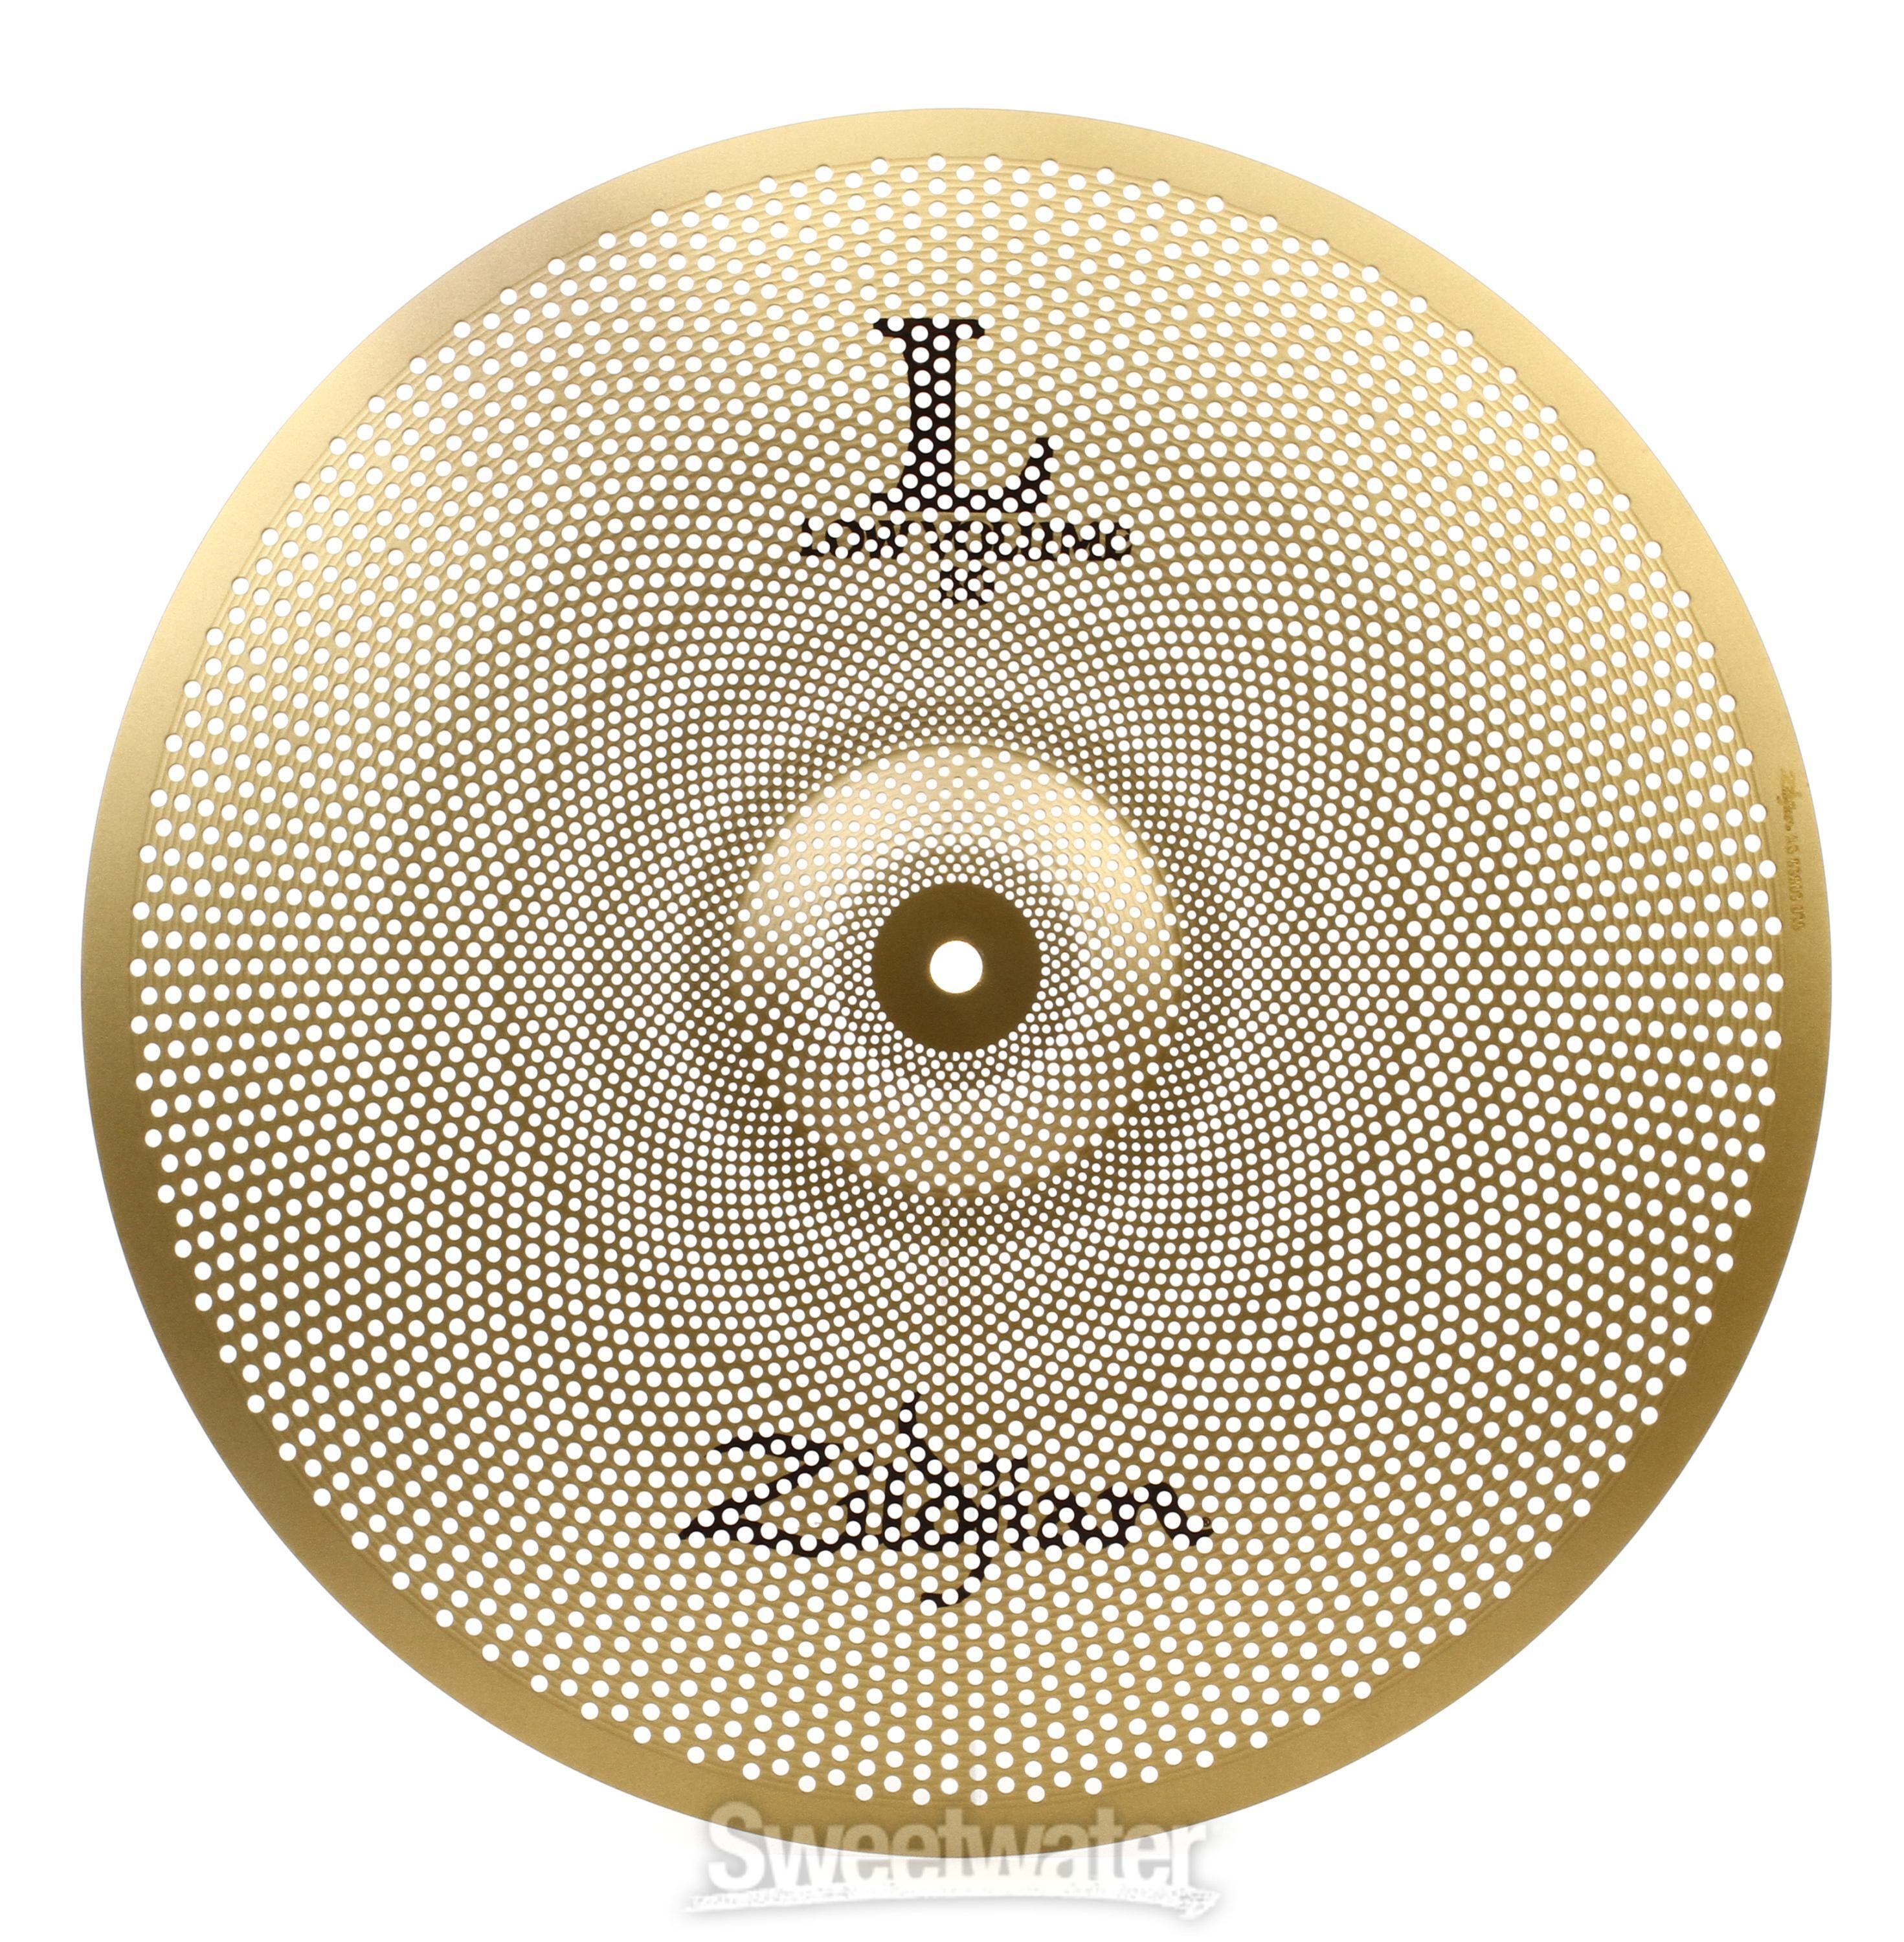 Zildjian L80 Low Volume Cymbal Set - 13/14/18 inch Reviews